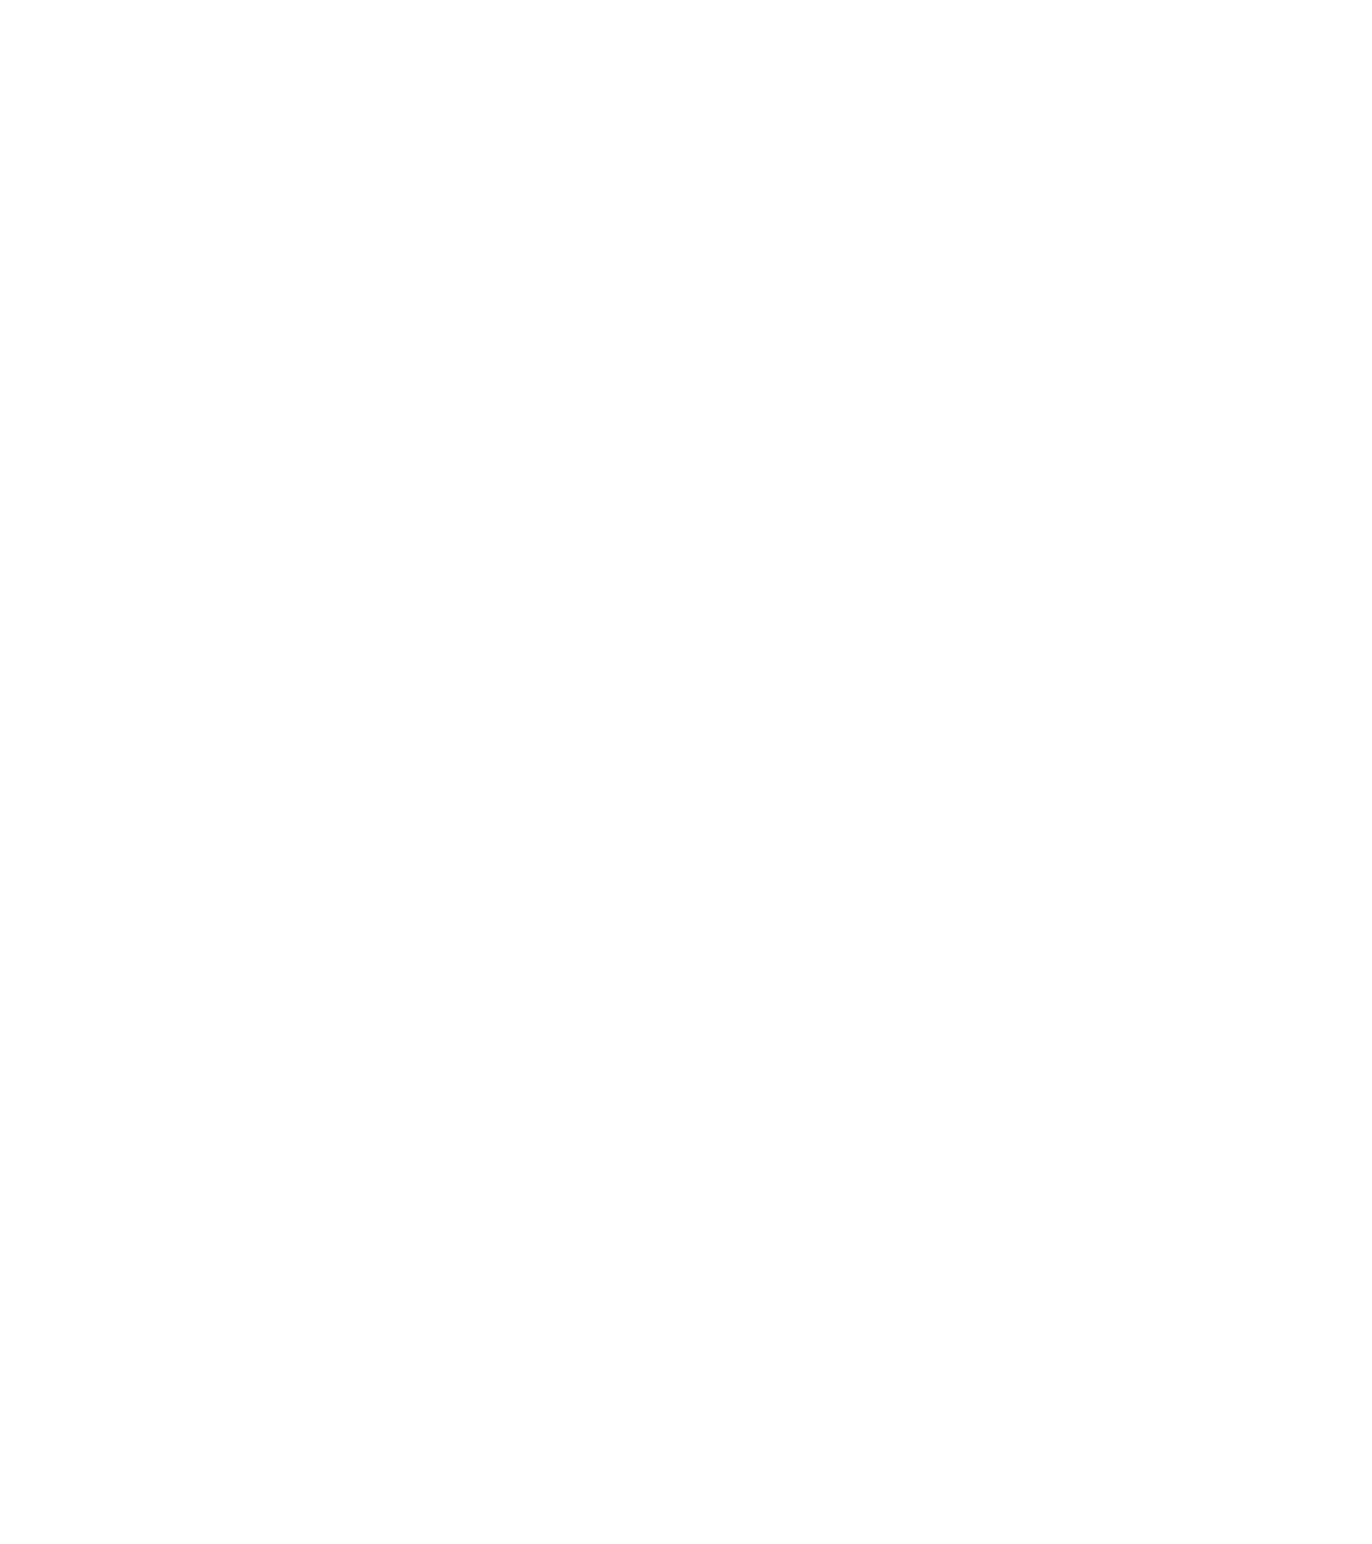 Genting Berhad logo for dark backgrounds (transparent PNG)